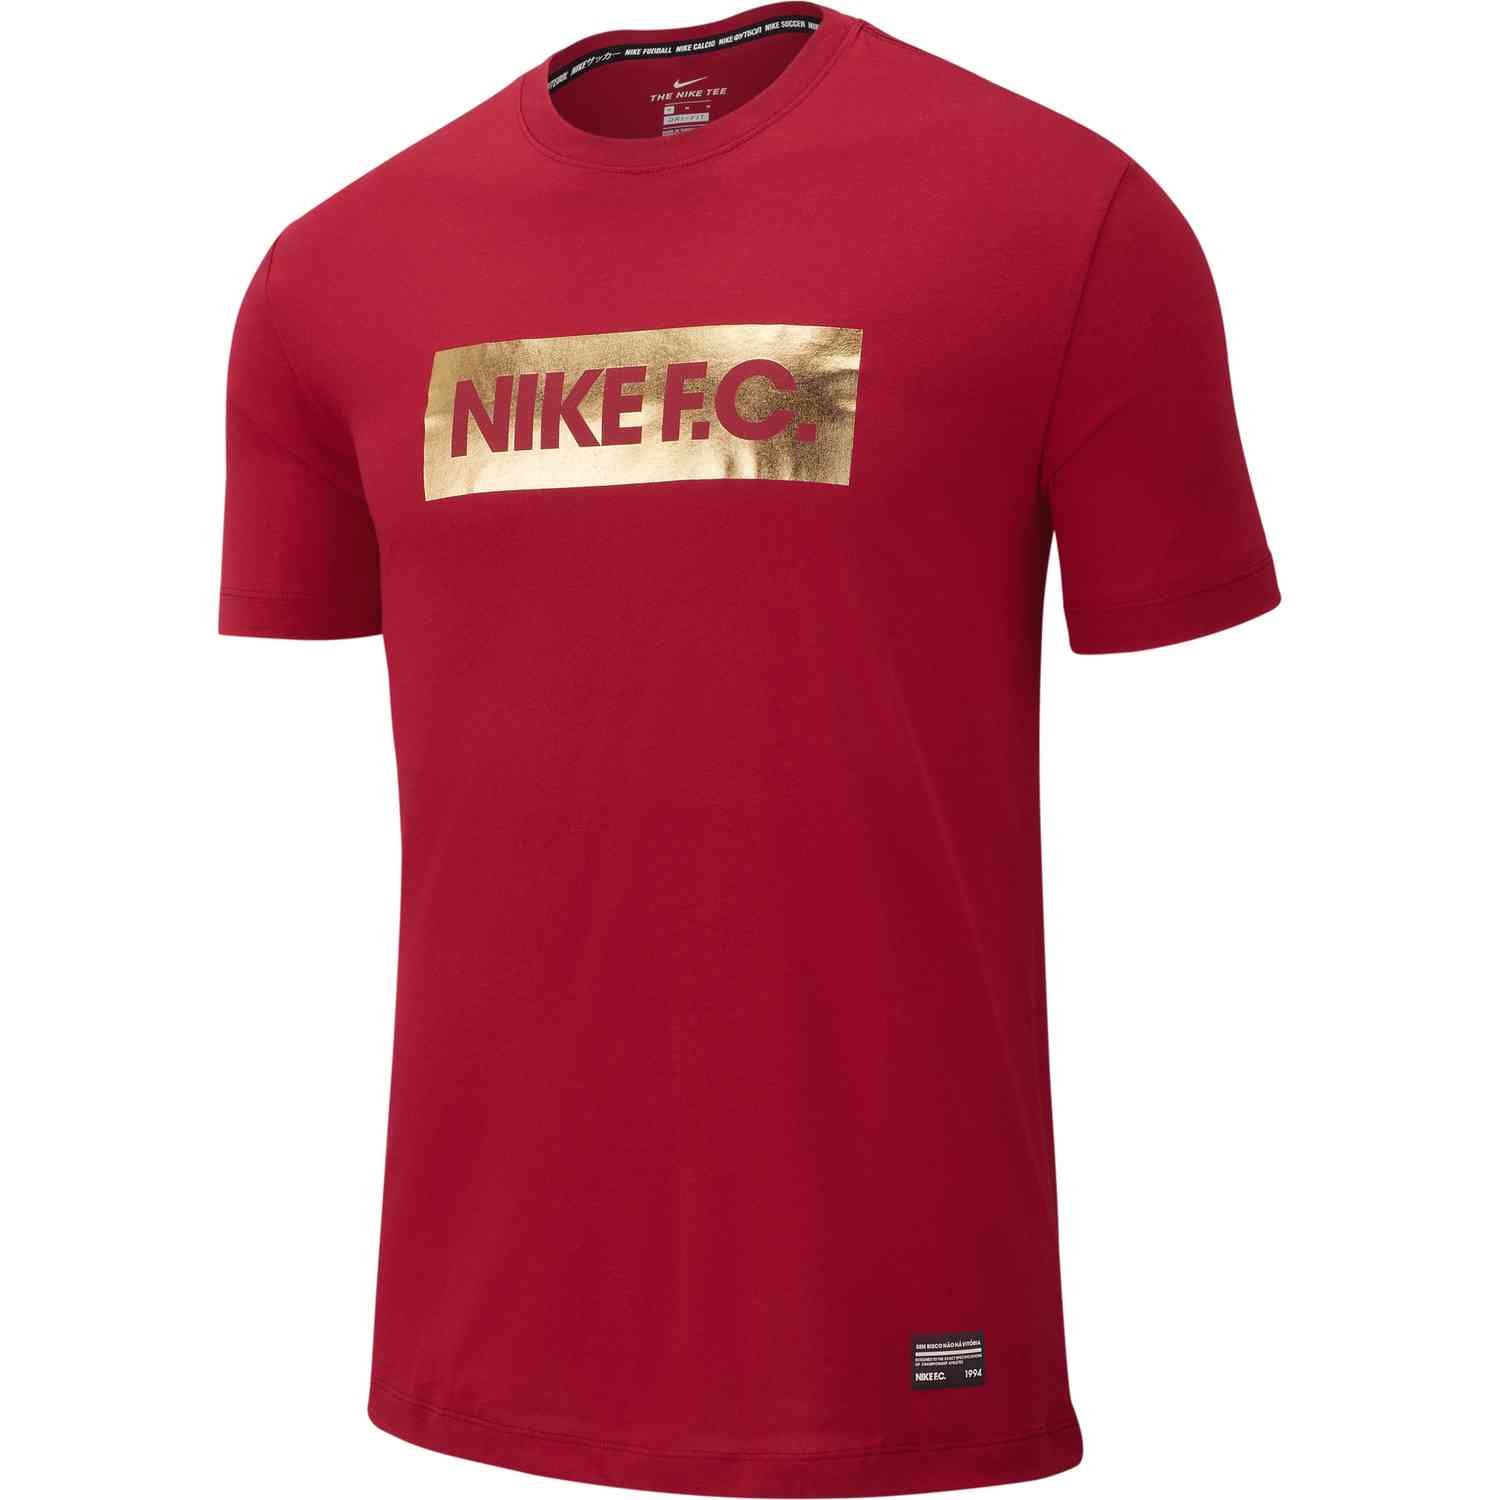 Nike FC Gold Block - Red - SoccerPro